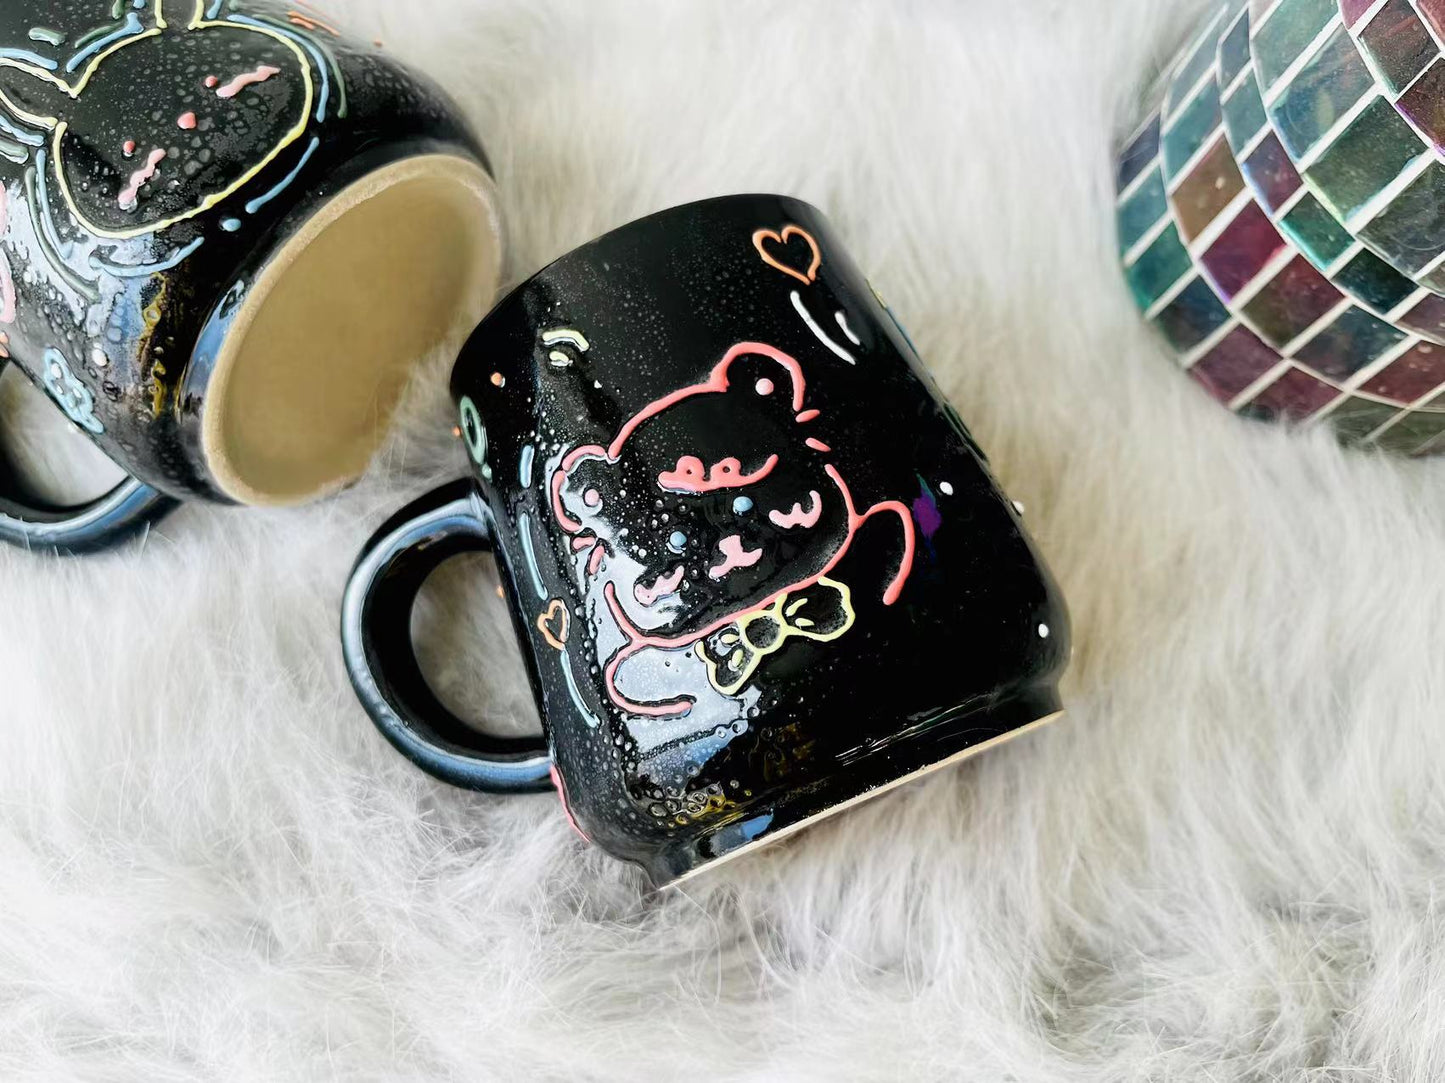 Cute Handpainted Cartoon Animal Ceramic Mugs, Personalized Ceramic Cup for Coffee Lovers